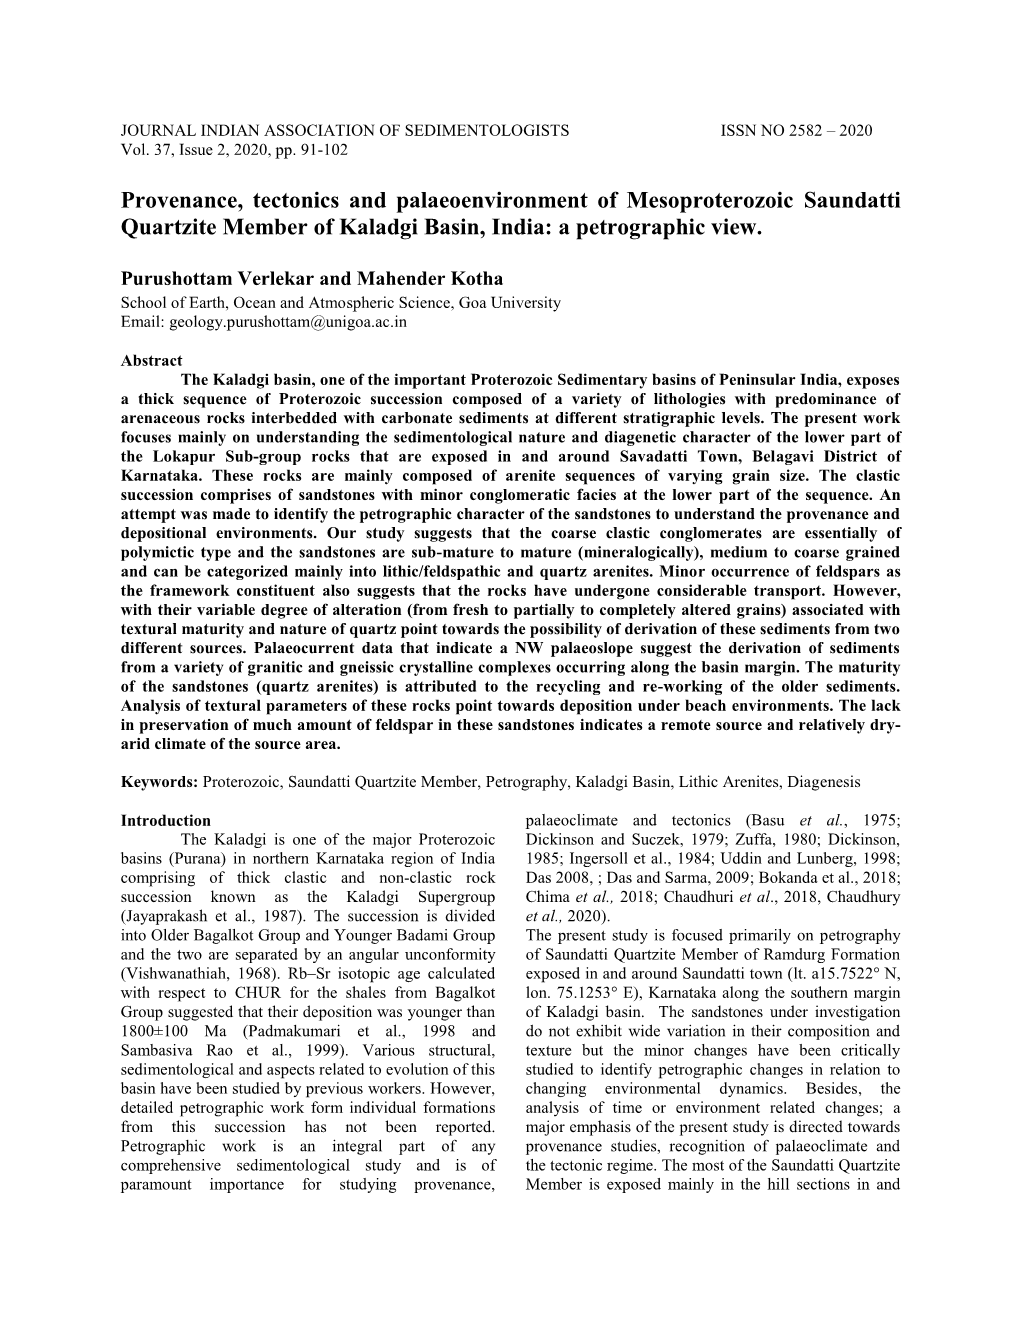 Provenance, Tectonics and Palaeoenvironment of Mesoproterozoic Saundatti Quartzite Member of Kaladgi Basin, India: a Petrographic View